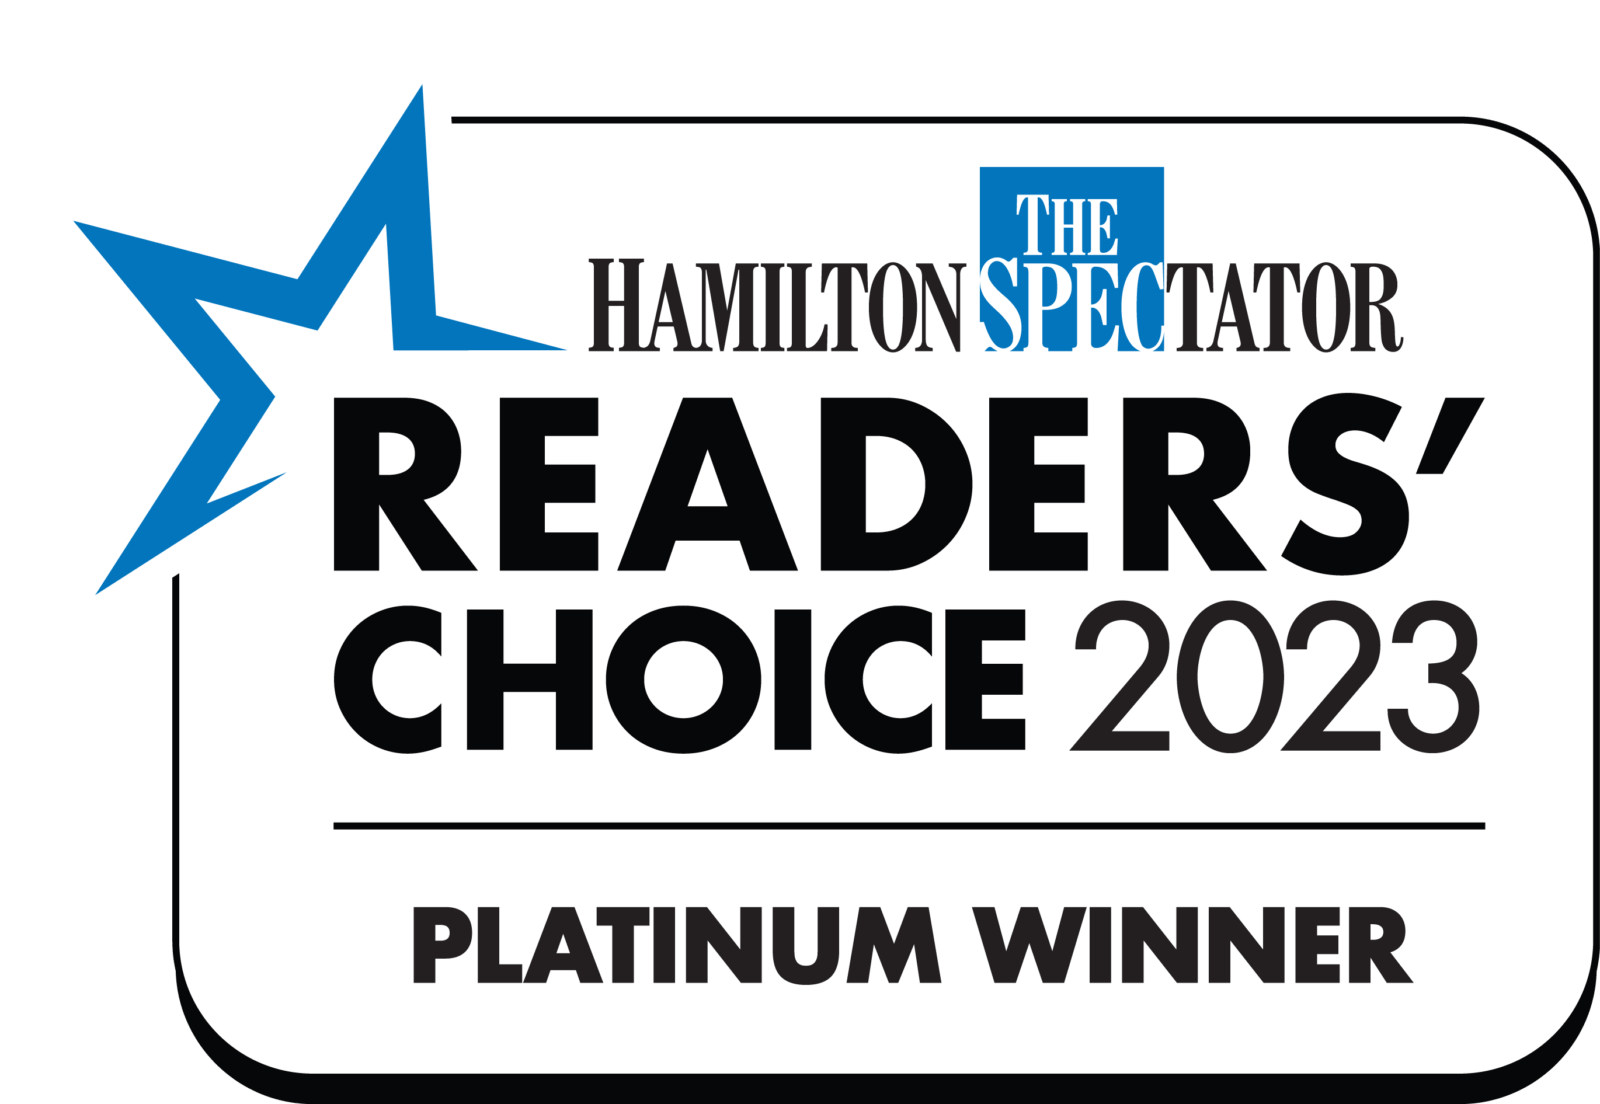 The Hamilton Spectator Readers' Choice 2023 Platinum